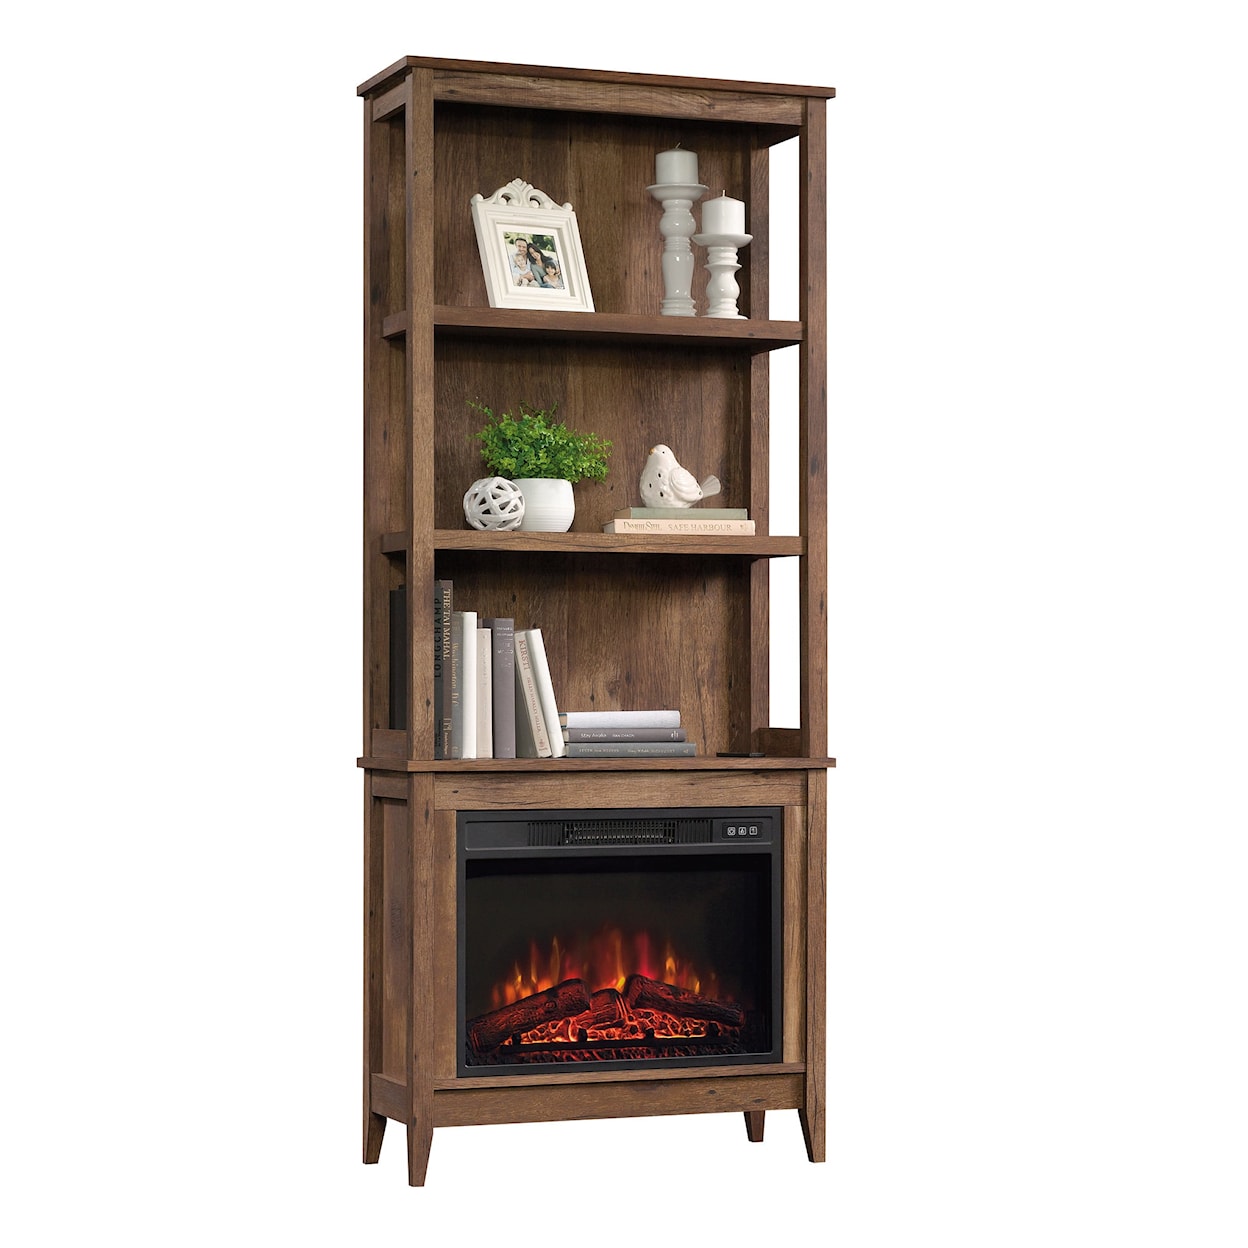 Sauder Miscellaneous Storage Bookshelf with Fireplace